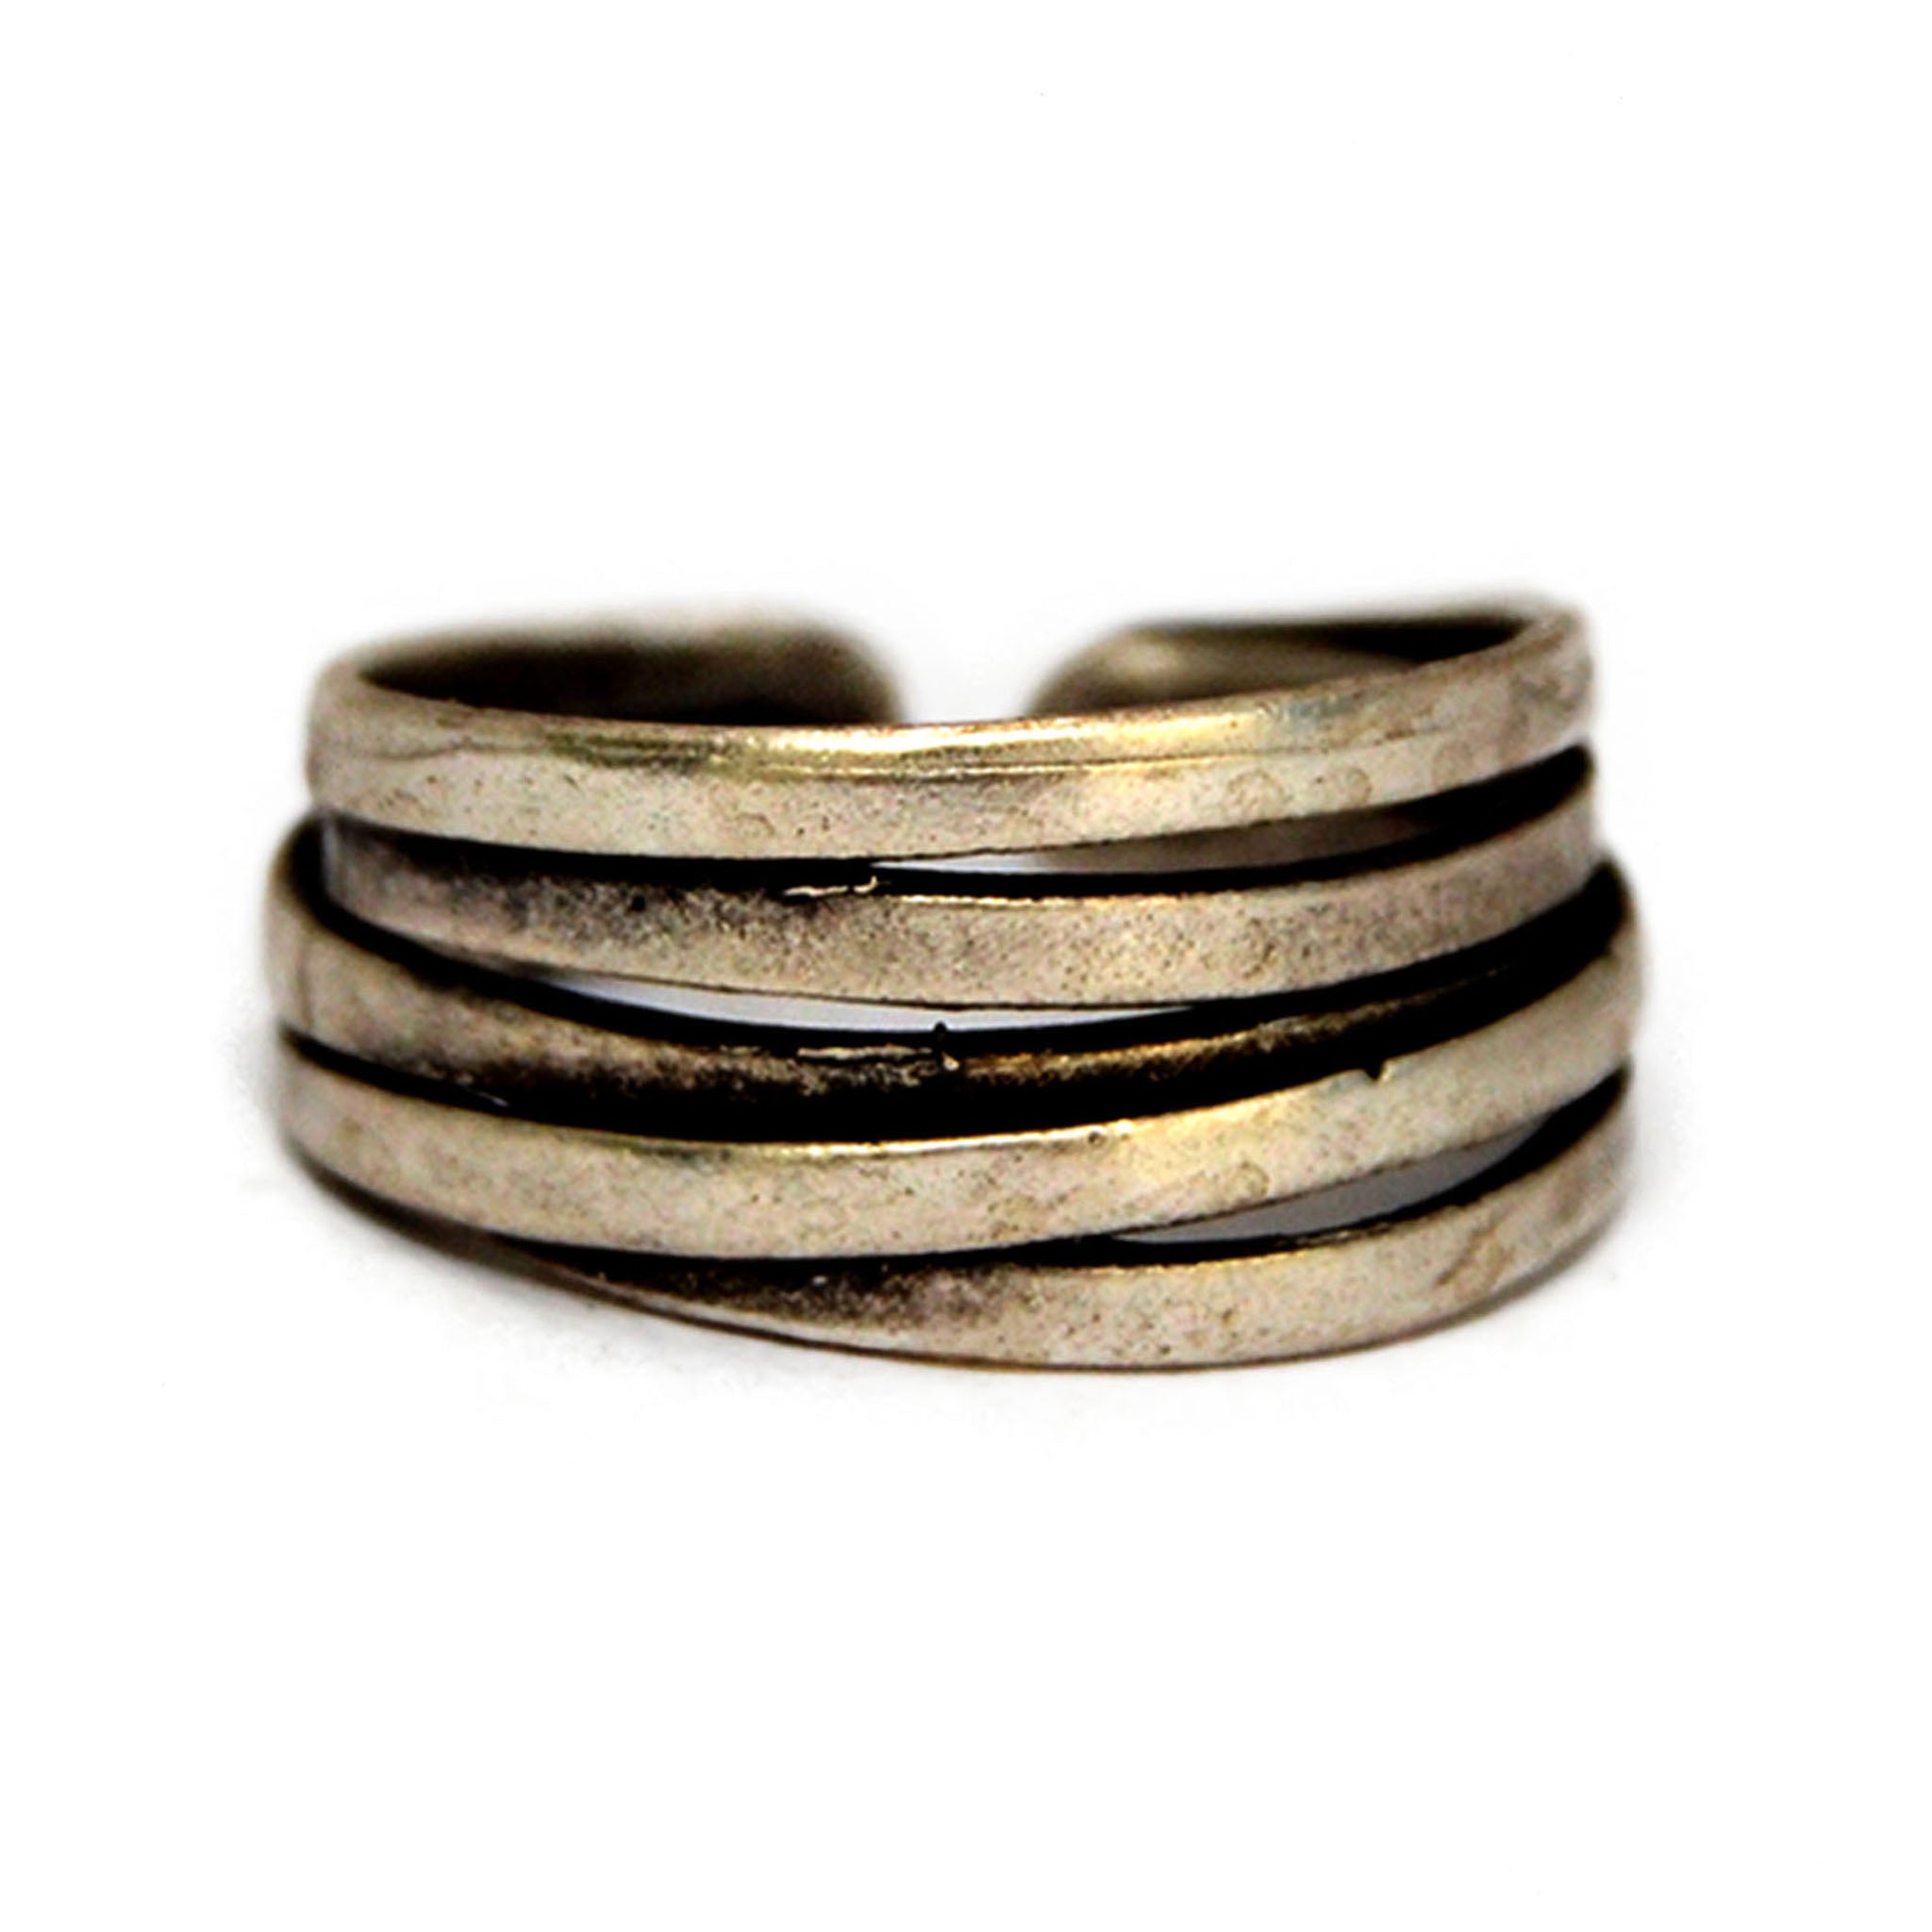 Interlaced silver ring